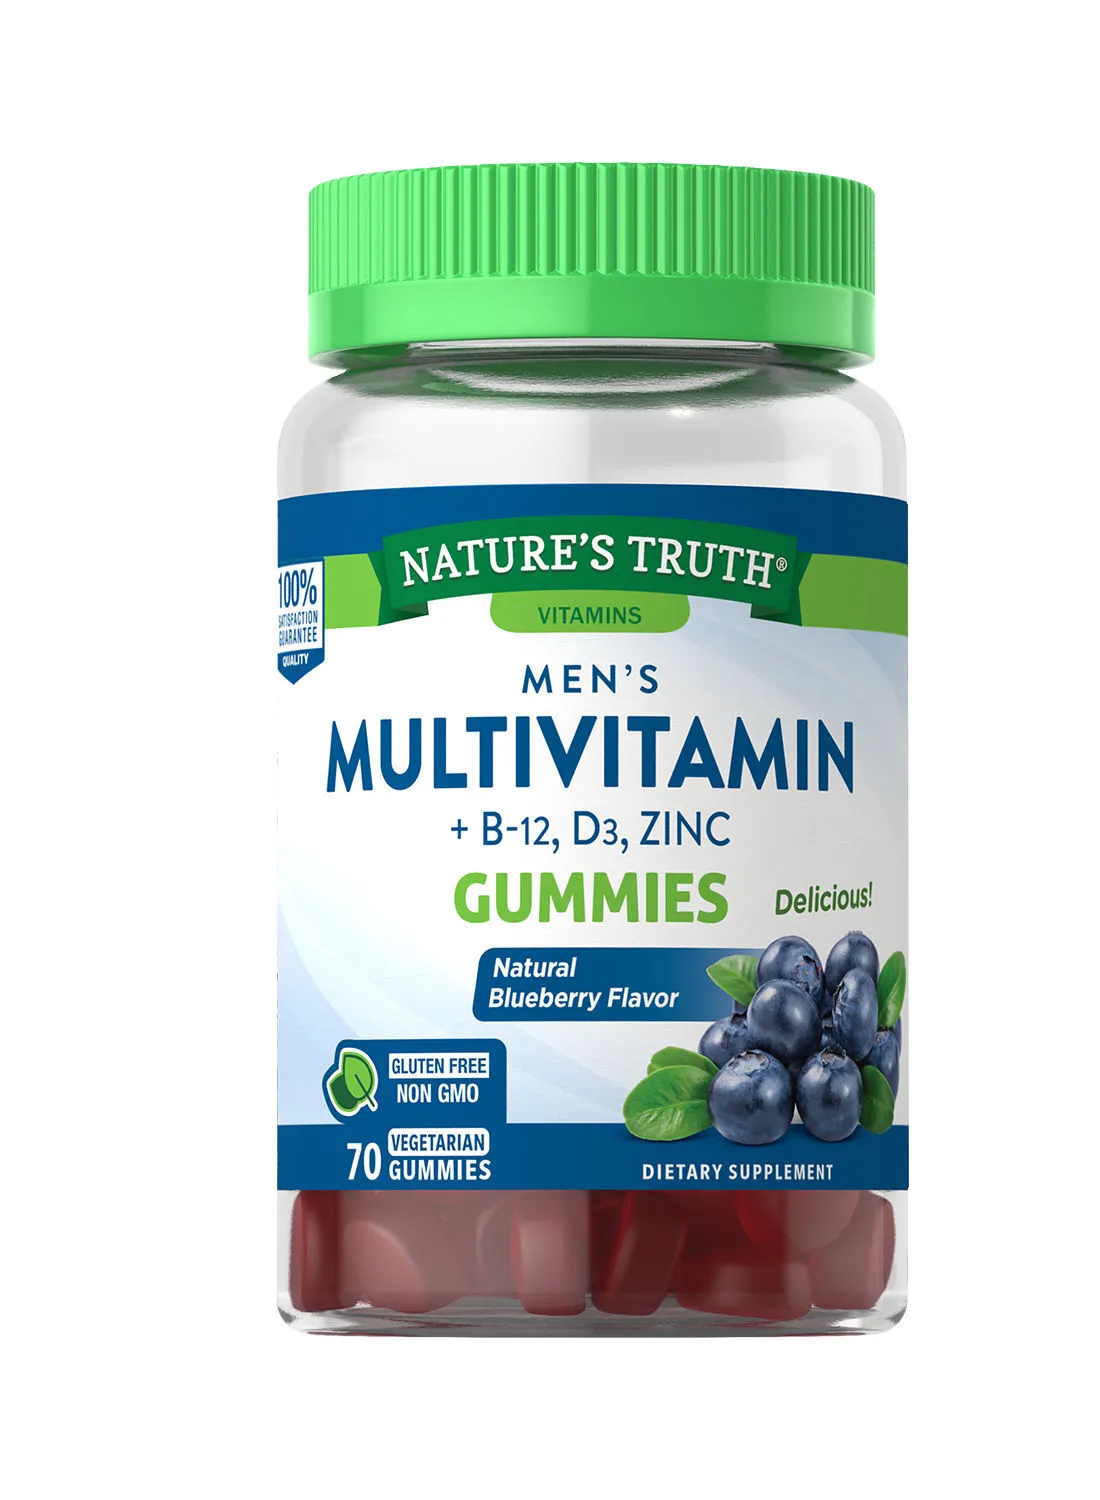 Nature's Truth Men’s Multivitamin + B-12, D3, Zinc, 70 Vegetarian Gummies